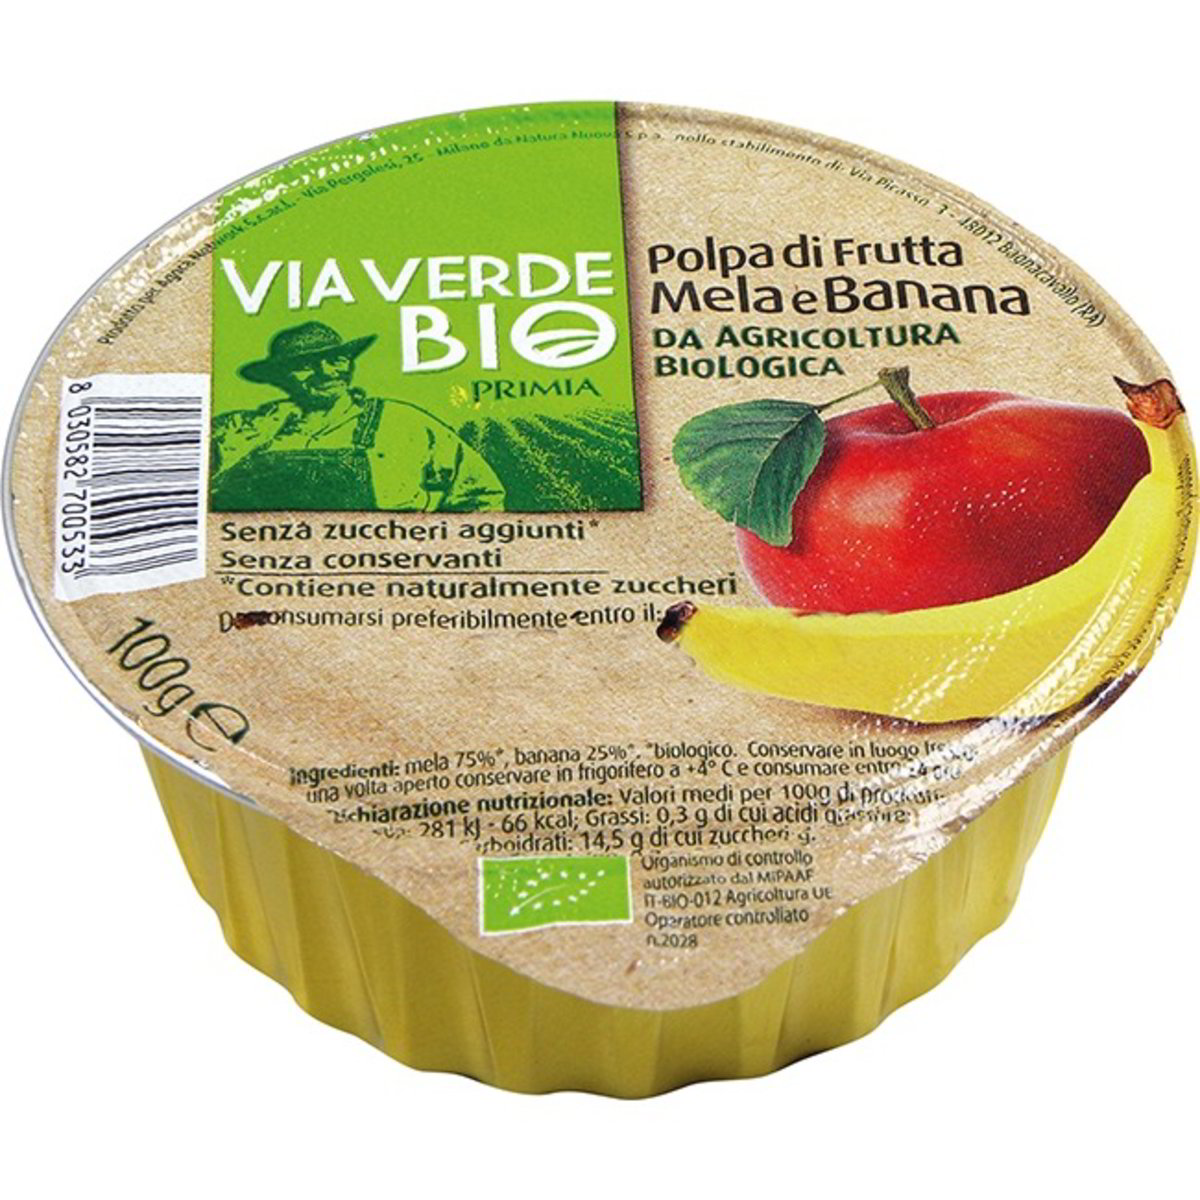 PRIMIA Polpa di mela e banana 100 GR Da agricoltura biologica. - Basko